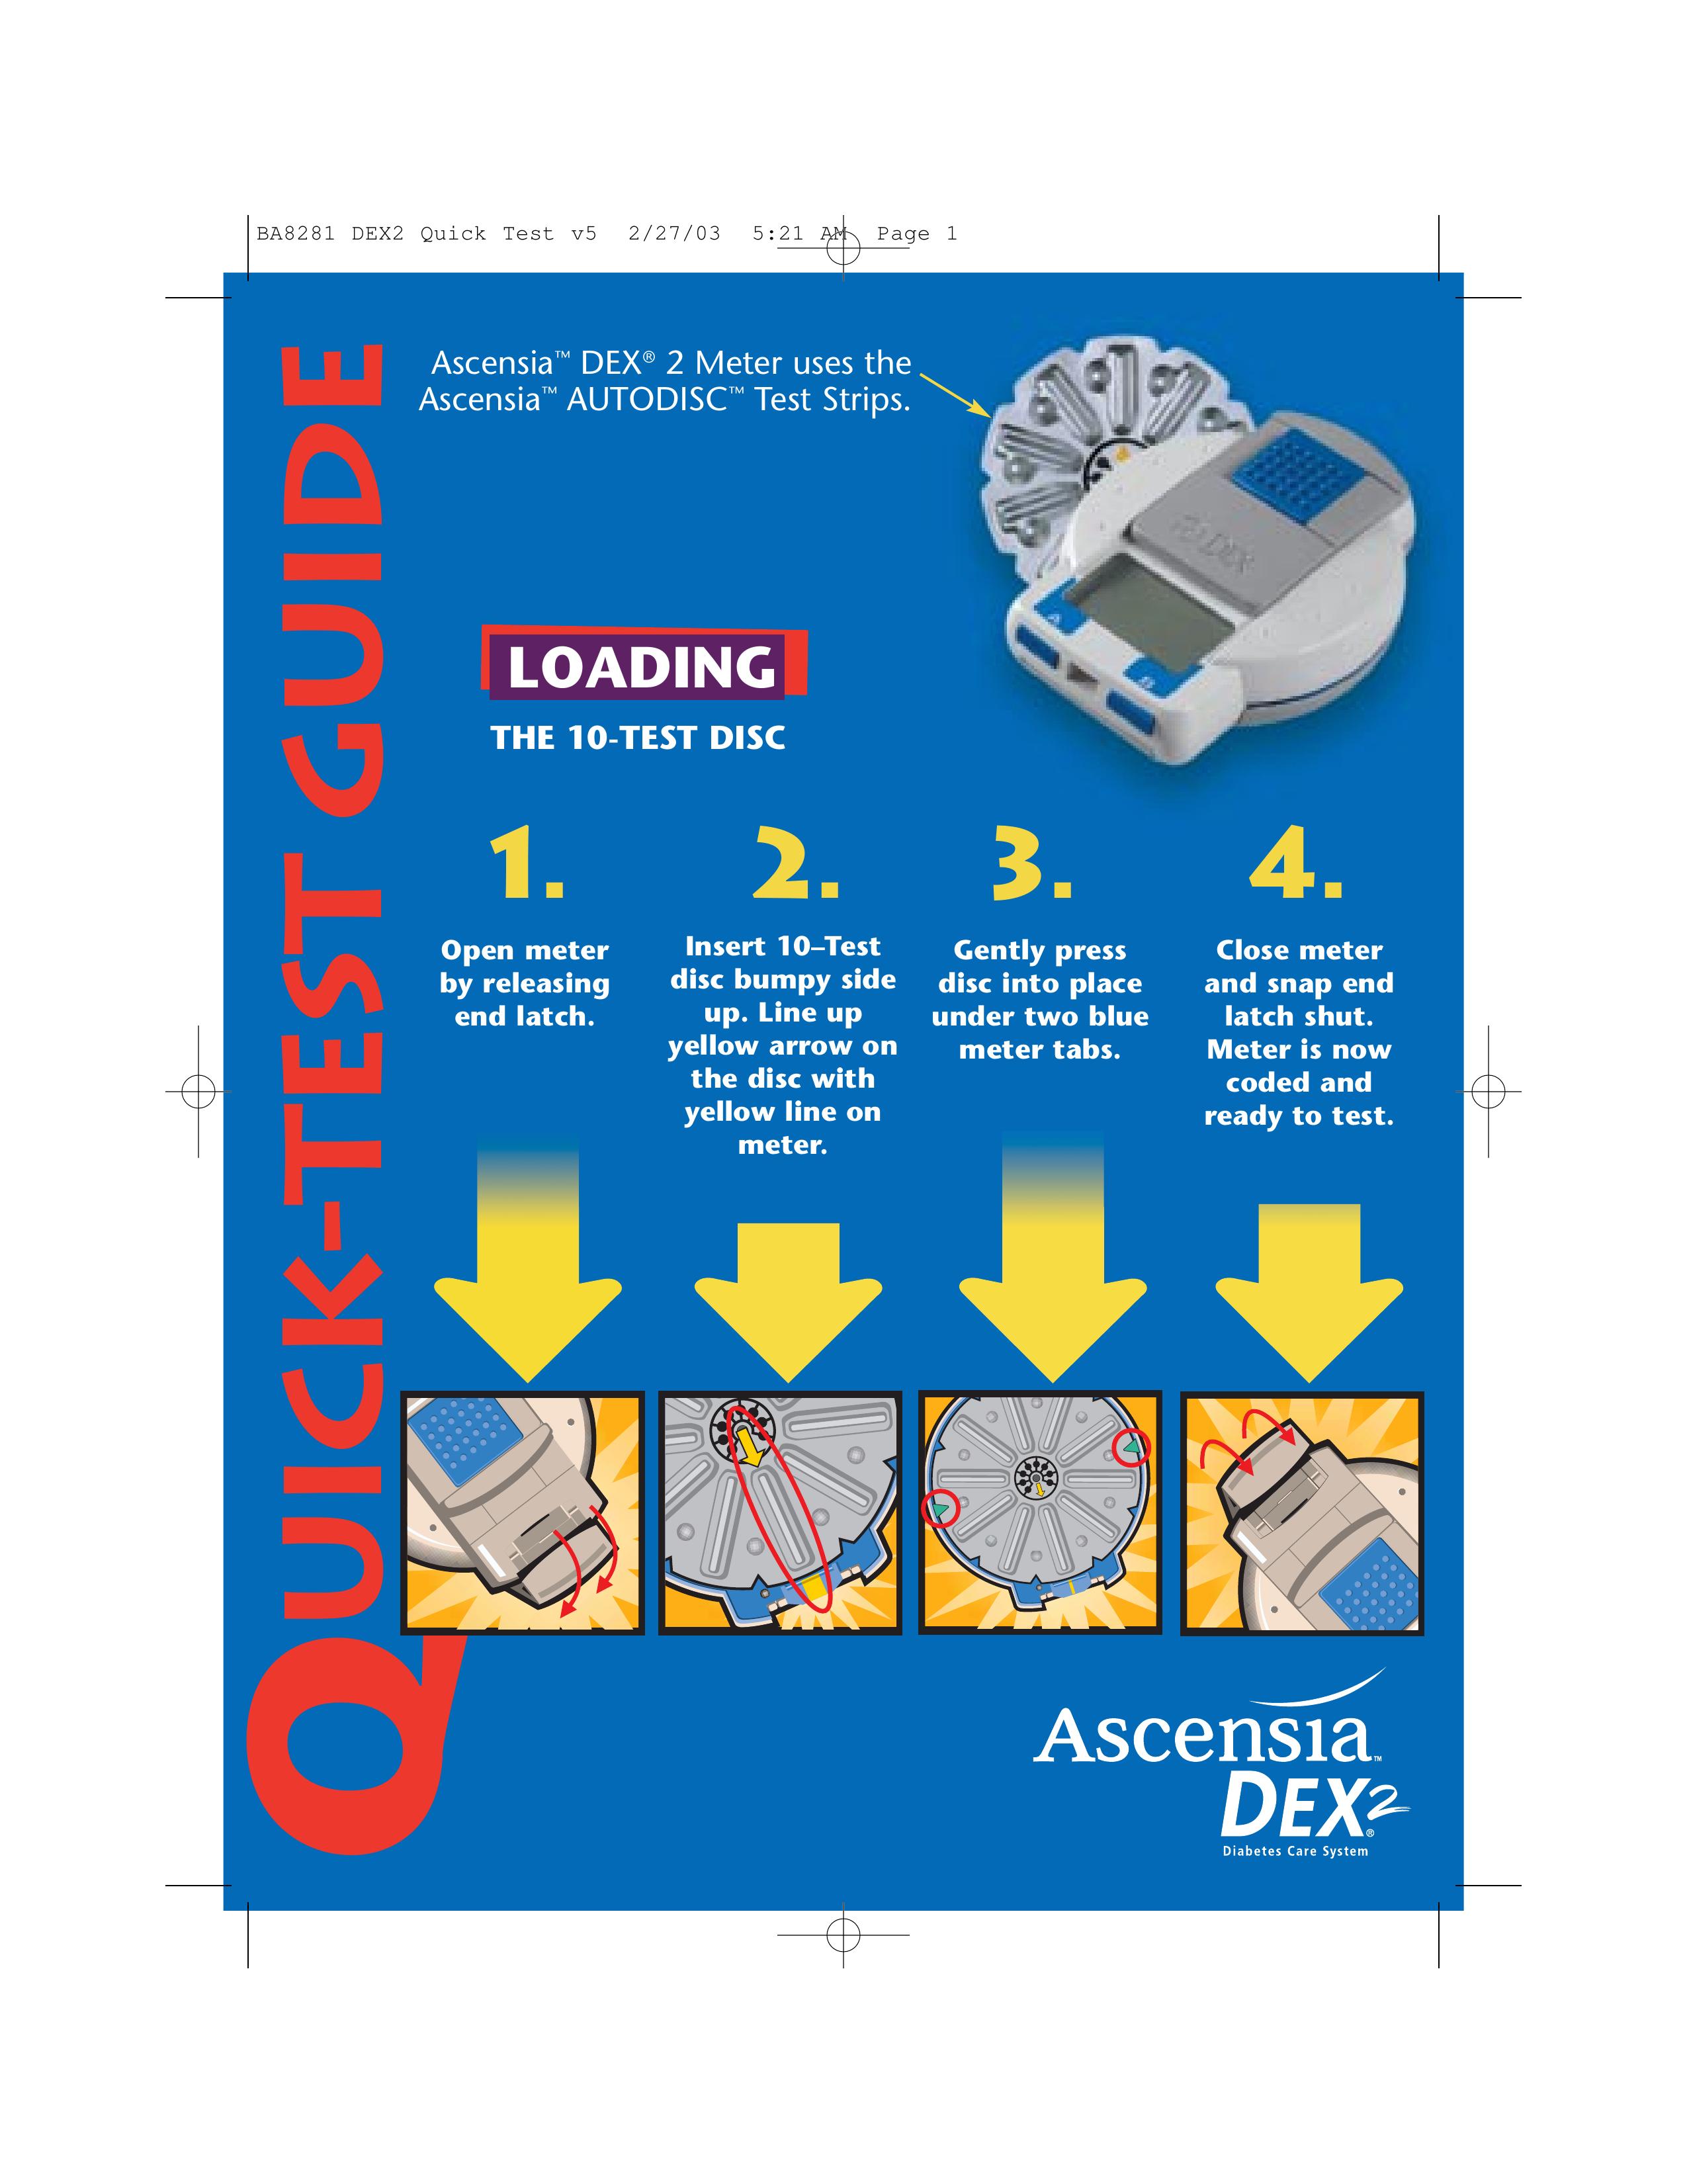 Bayer HealthCare Ascensia DEX2 Blood Pressure Monitor User Manual (Page 1)